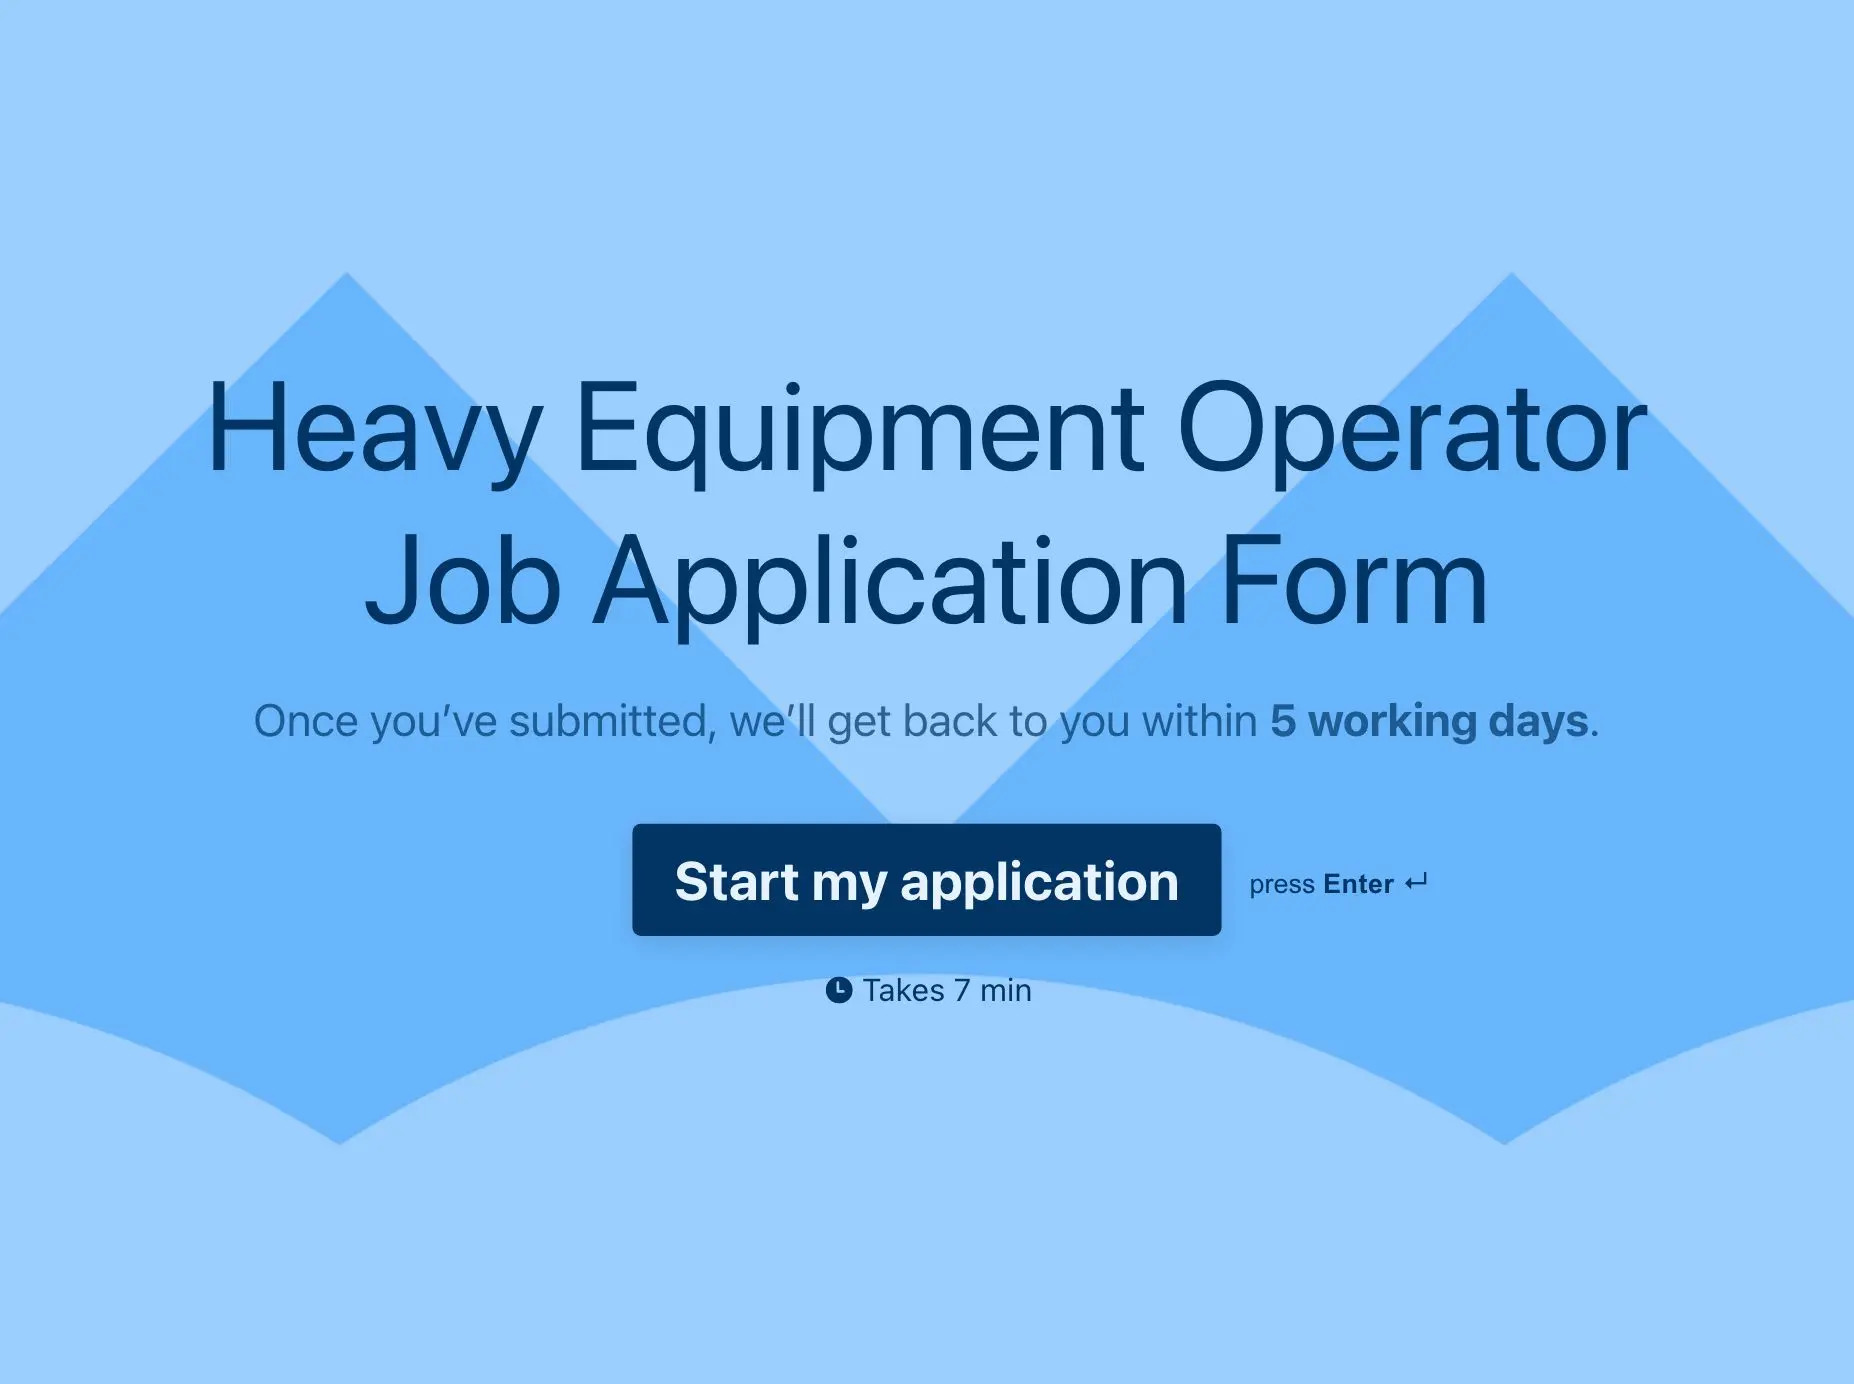 Heavy Equipment Operator Job Application Form Template Hero